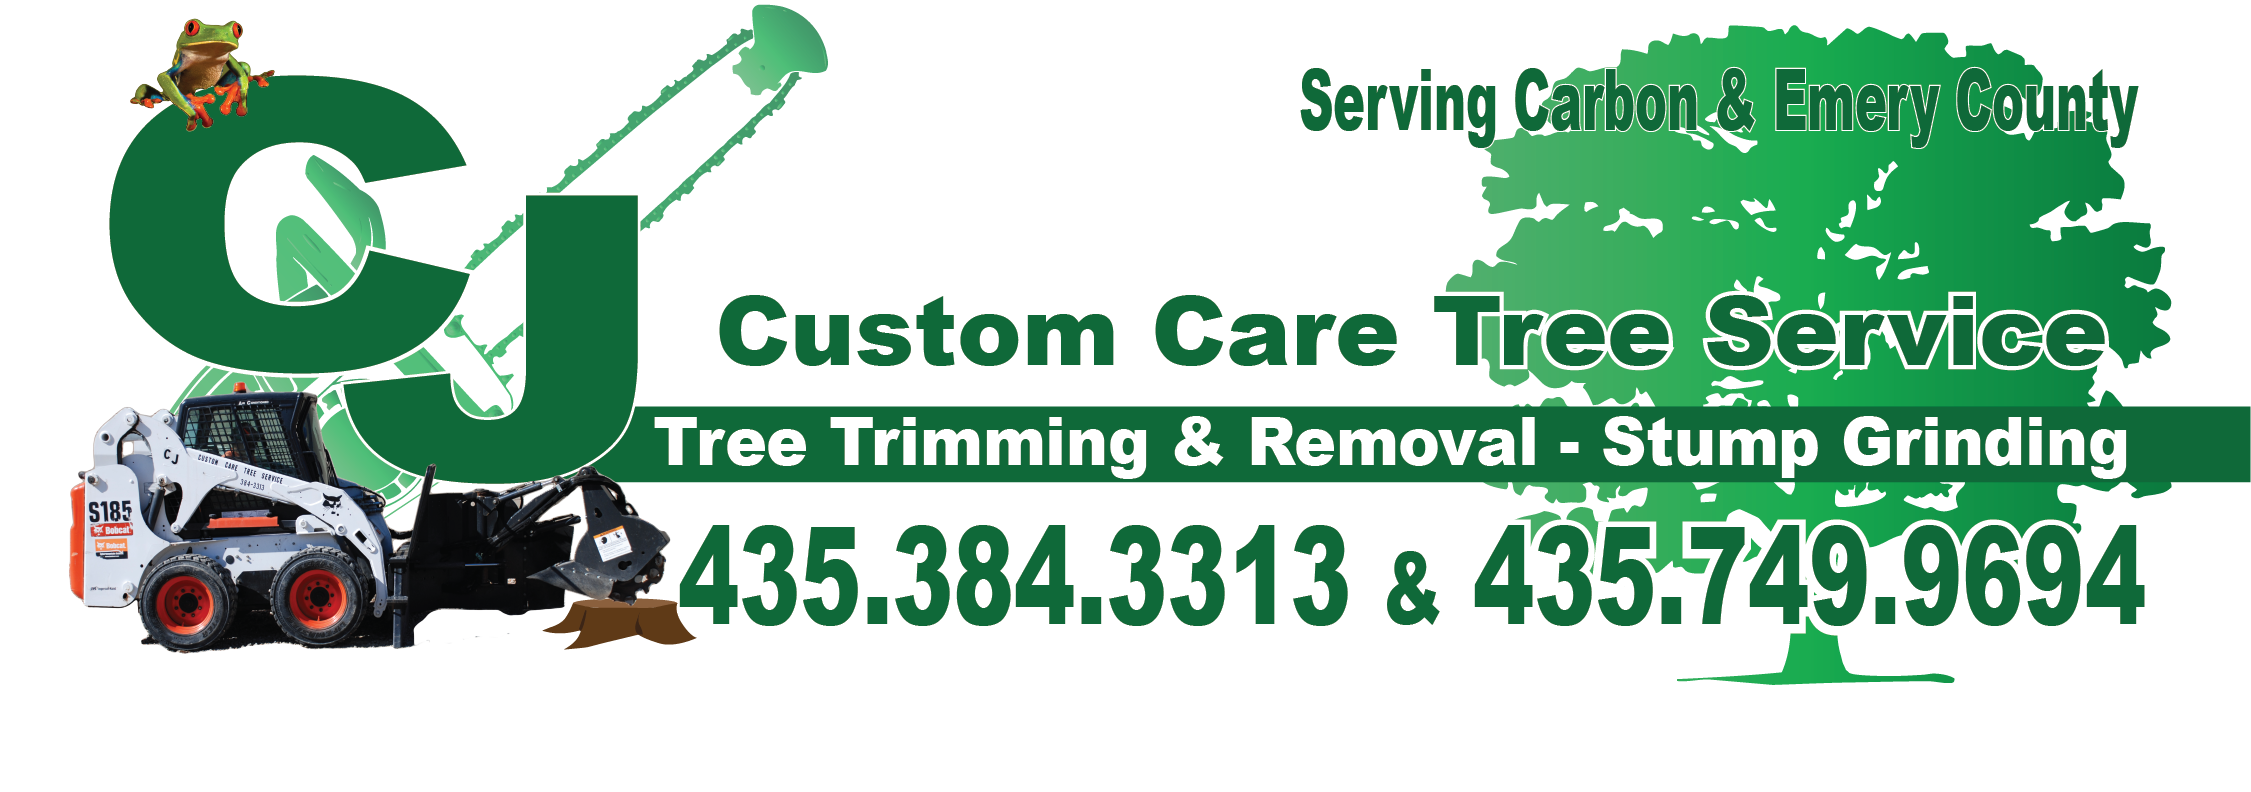 CJ Custom Care Tree Service